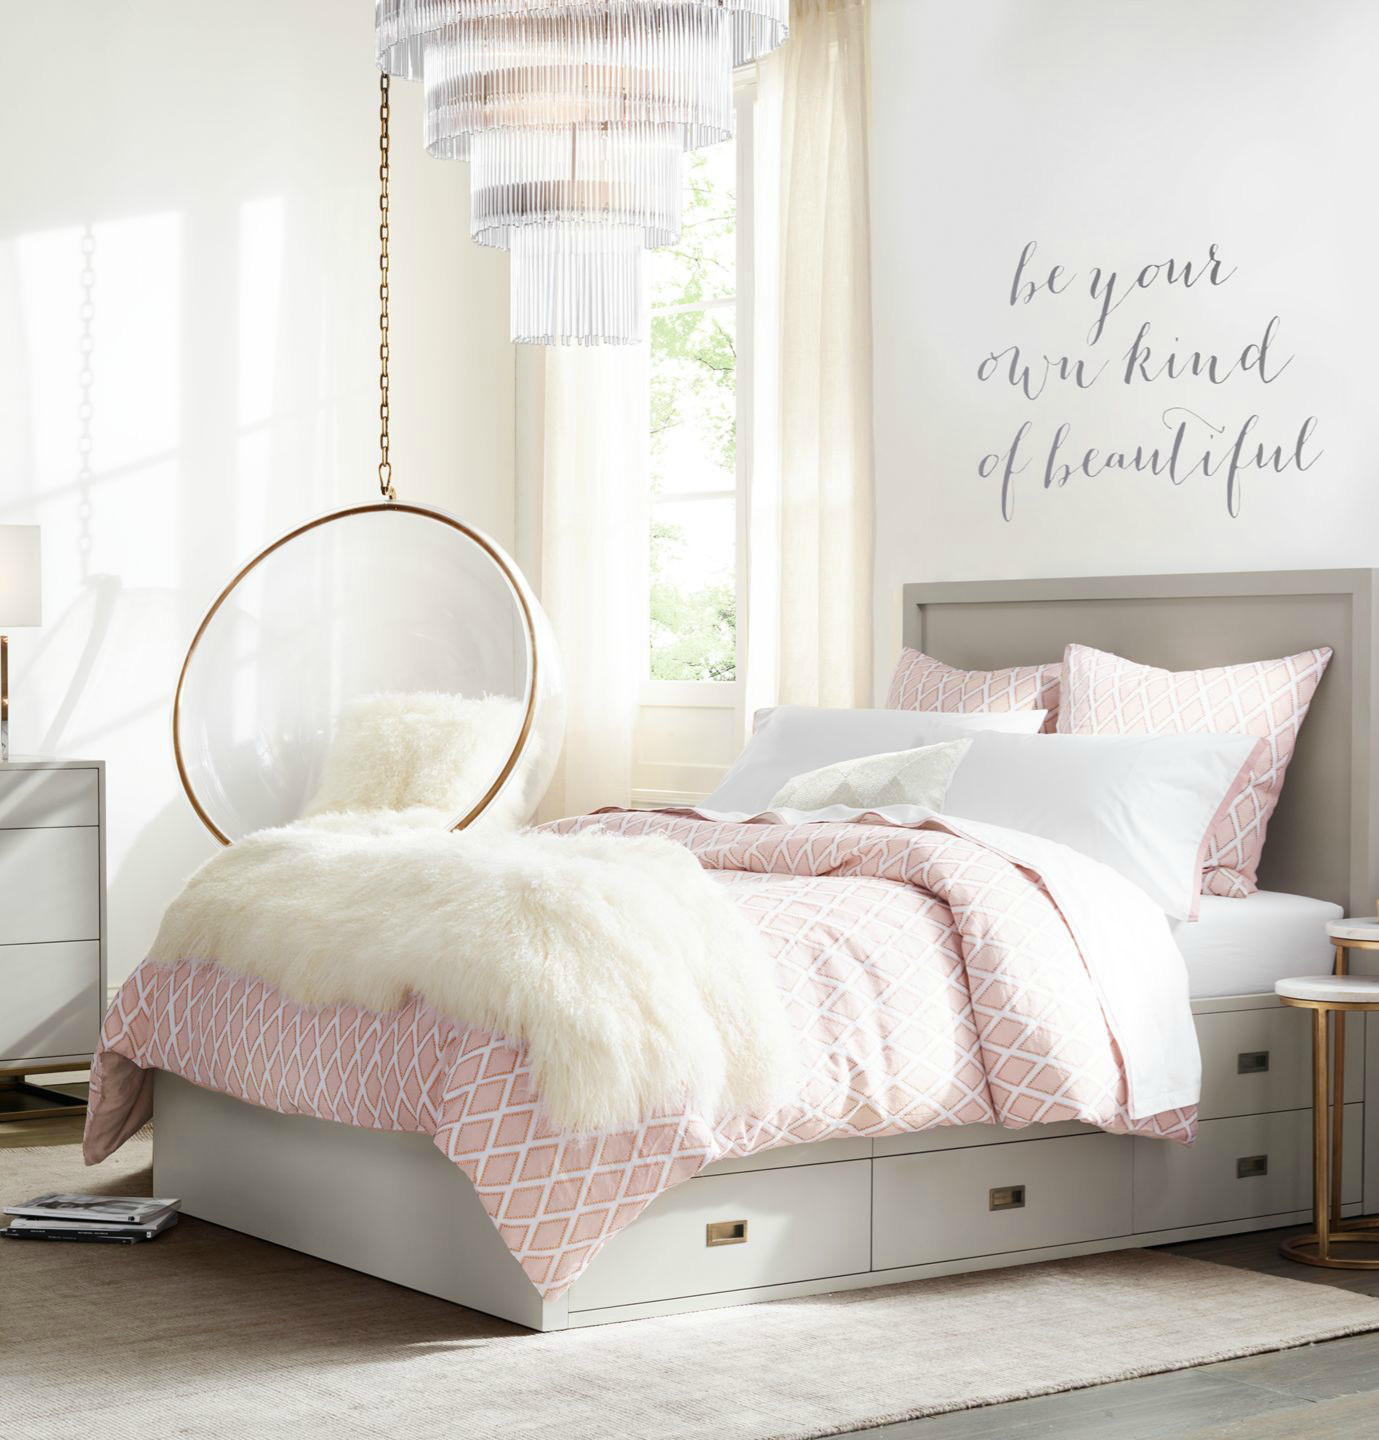 Cute Teenage Girl Bedroom Ideas
 50 Cute Teenage Girl Bedroom Ideas